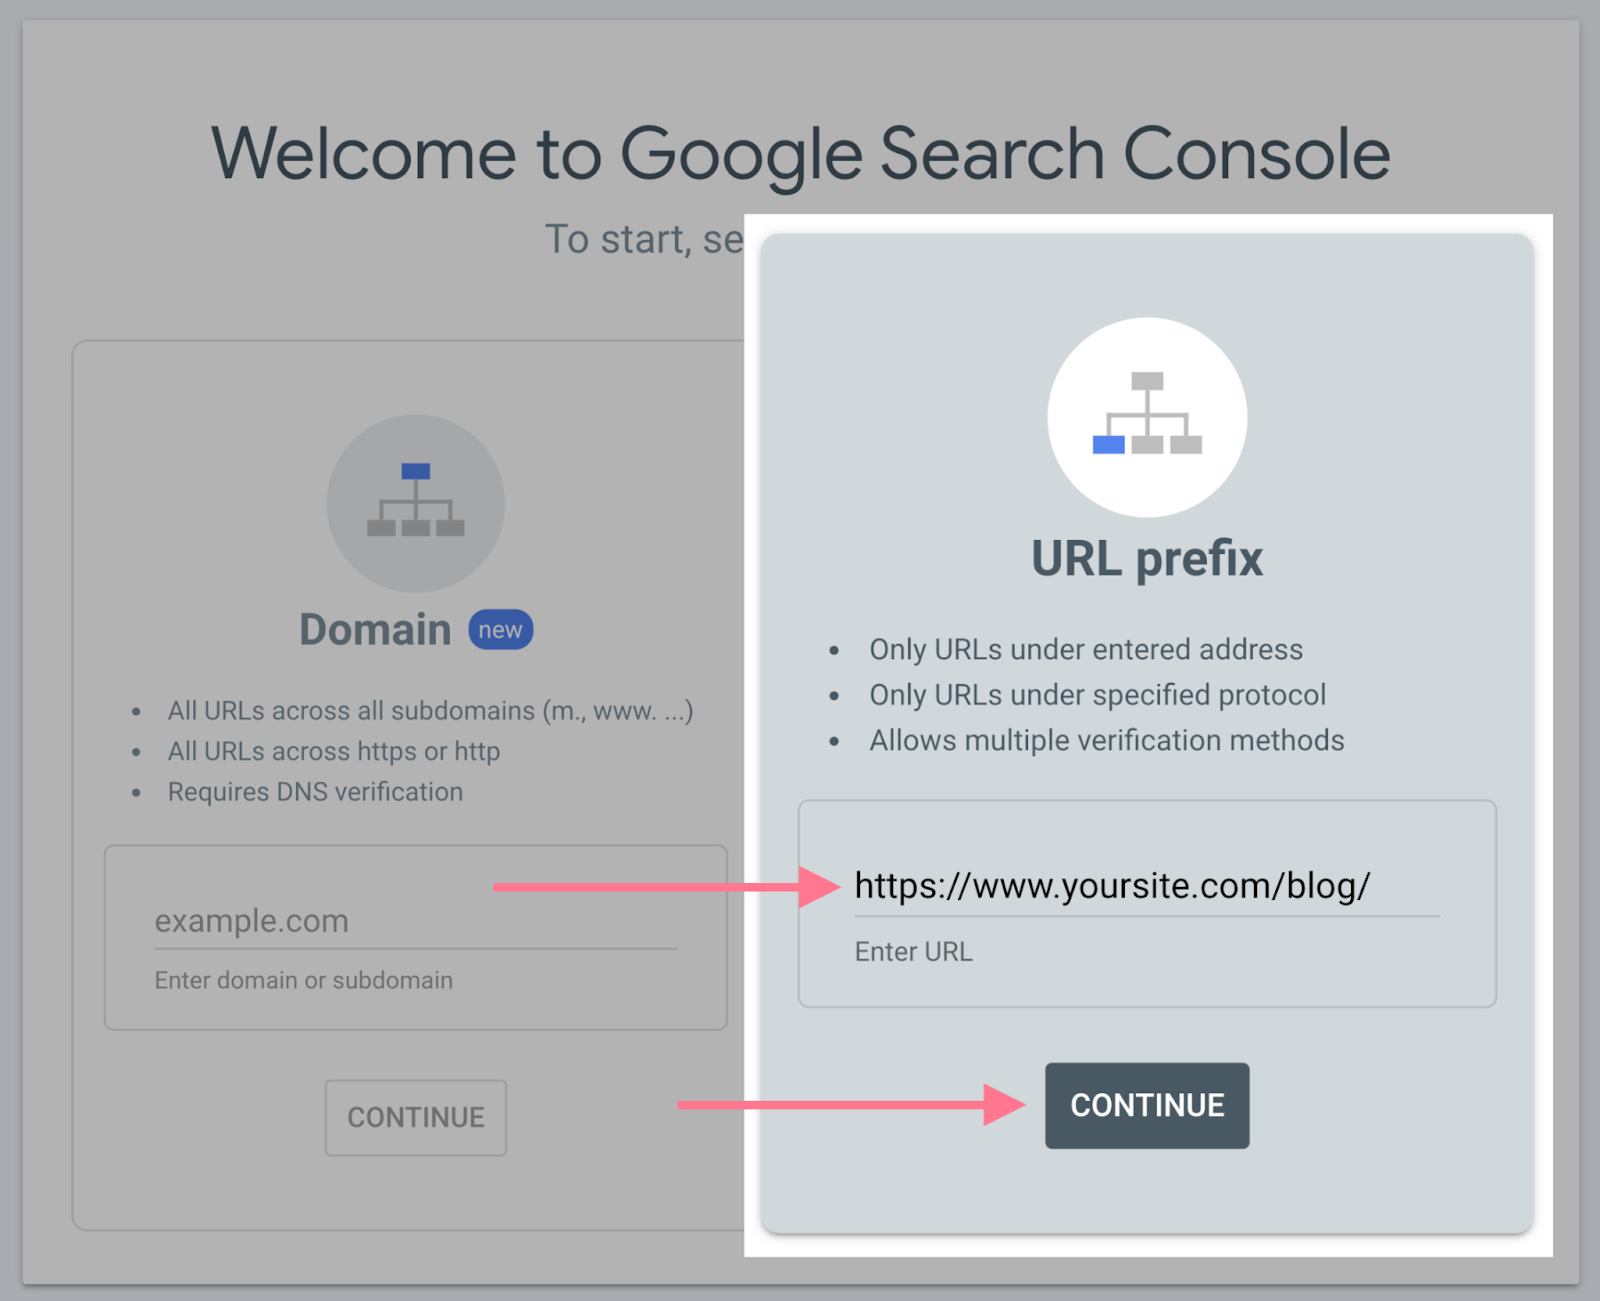 “URL prefix” module in Google Search Console